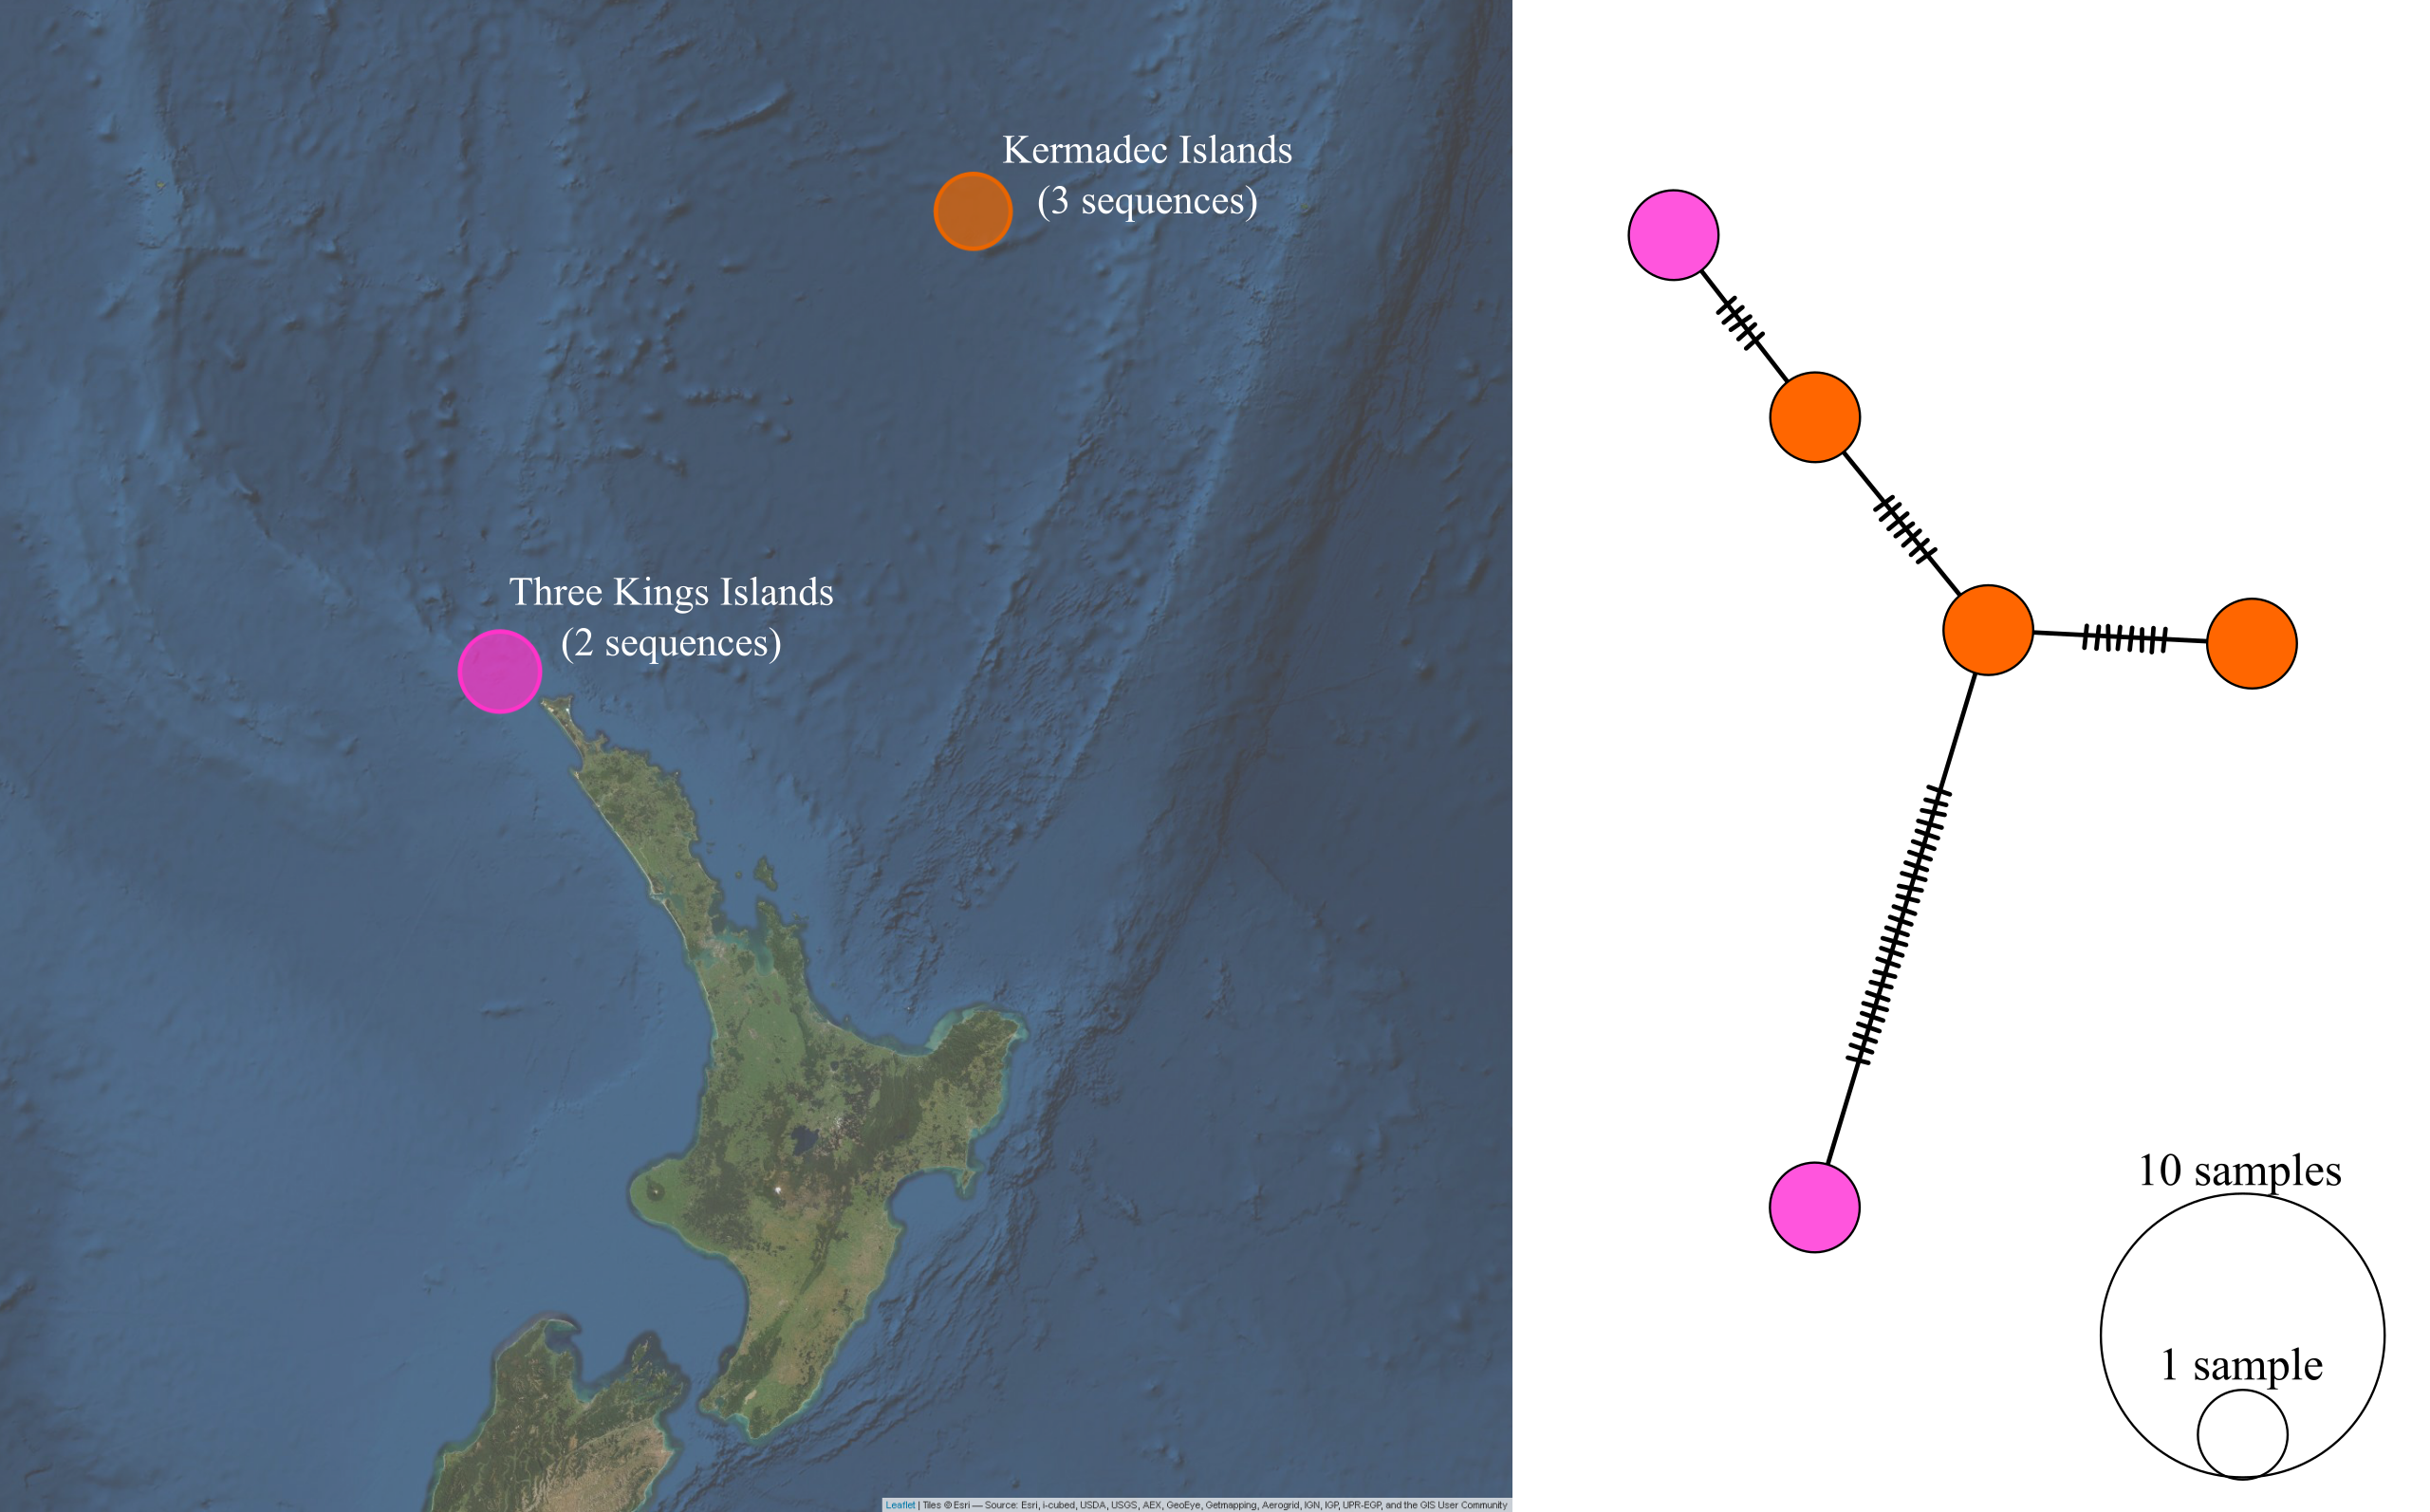 Haplotype network and sampling locations of *P. georgianus* from Three Kings Islands and Kermadec Islands.